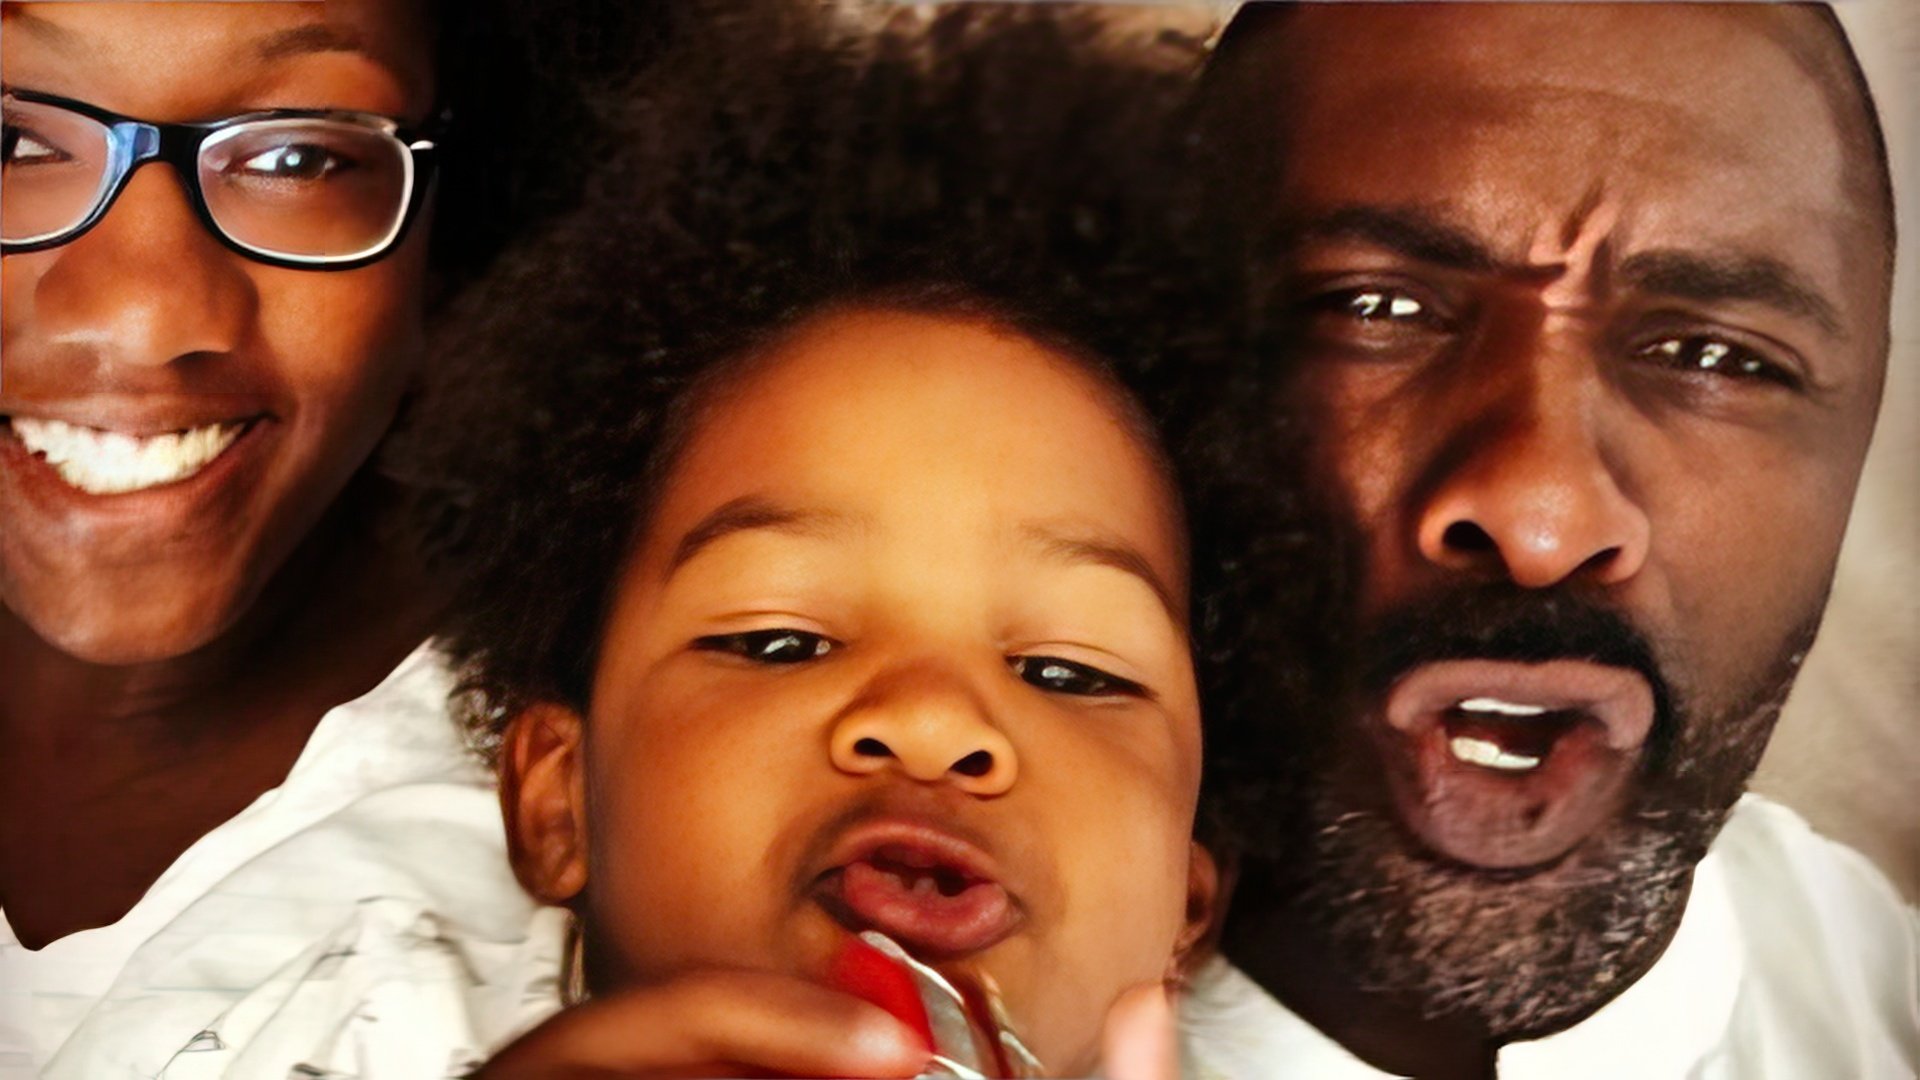 Idris Elba with his son Winston and former beloved Naiyana